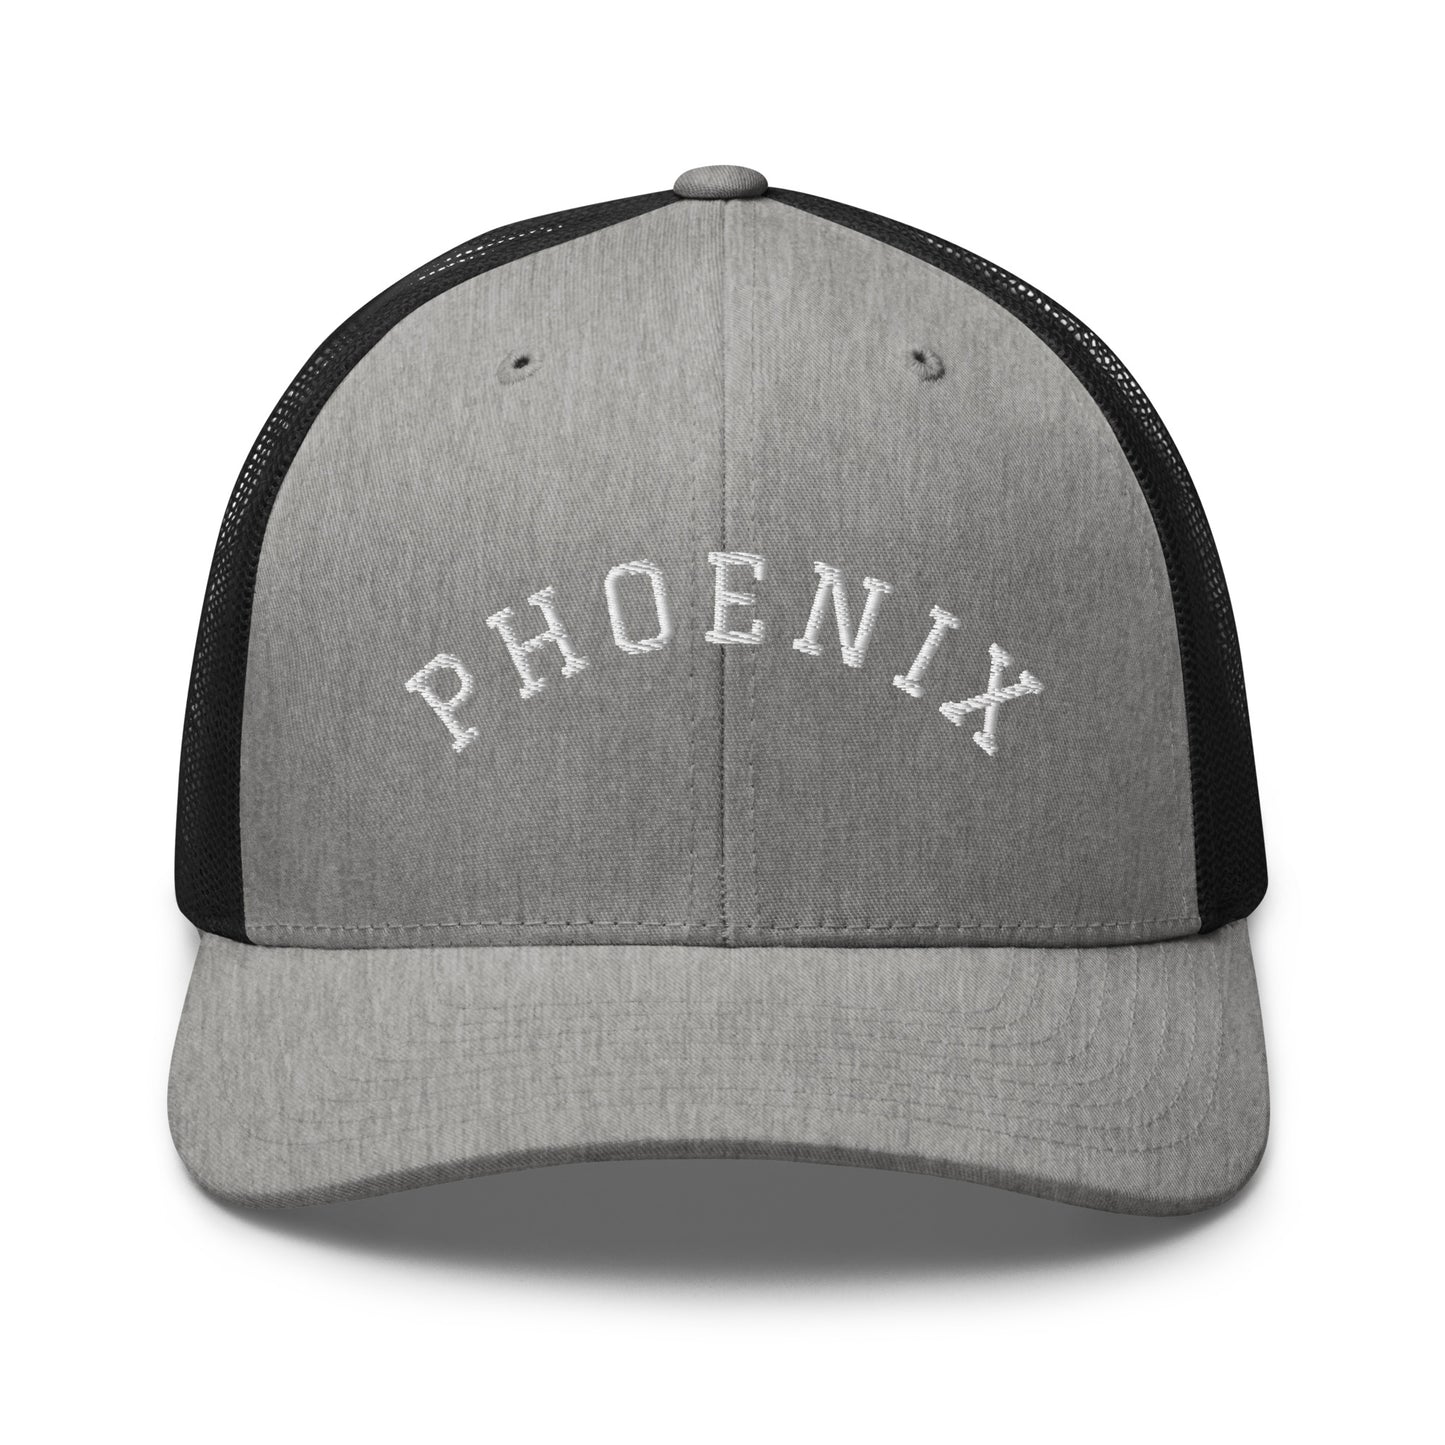 Phoenix Arch Mid 6 Panel Snapback Trucker Hat